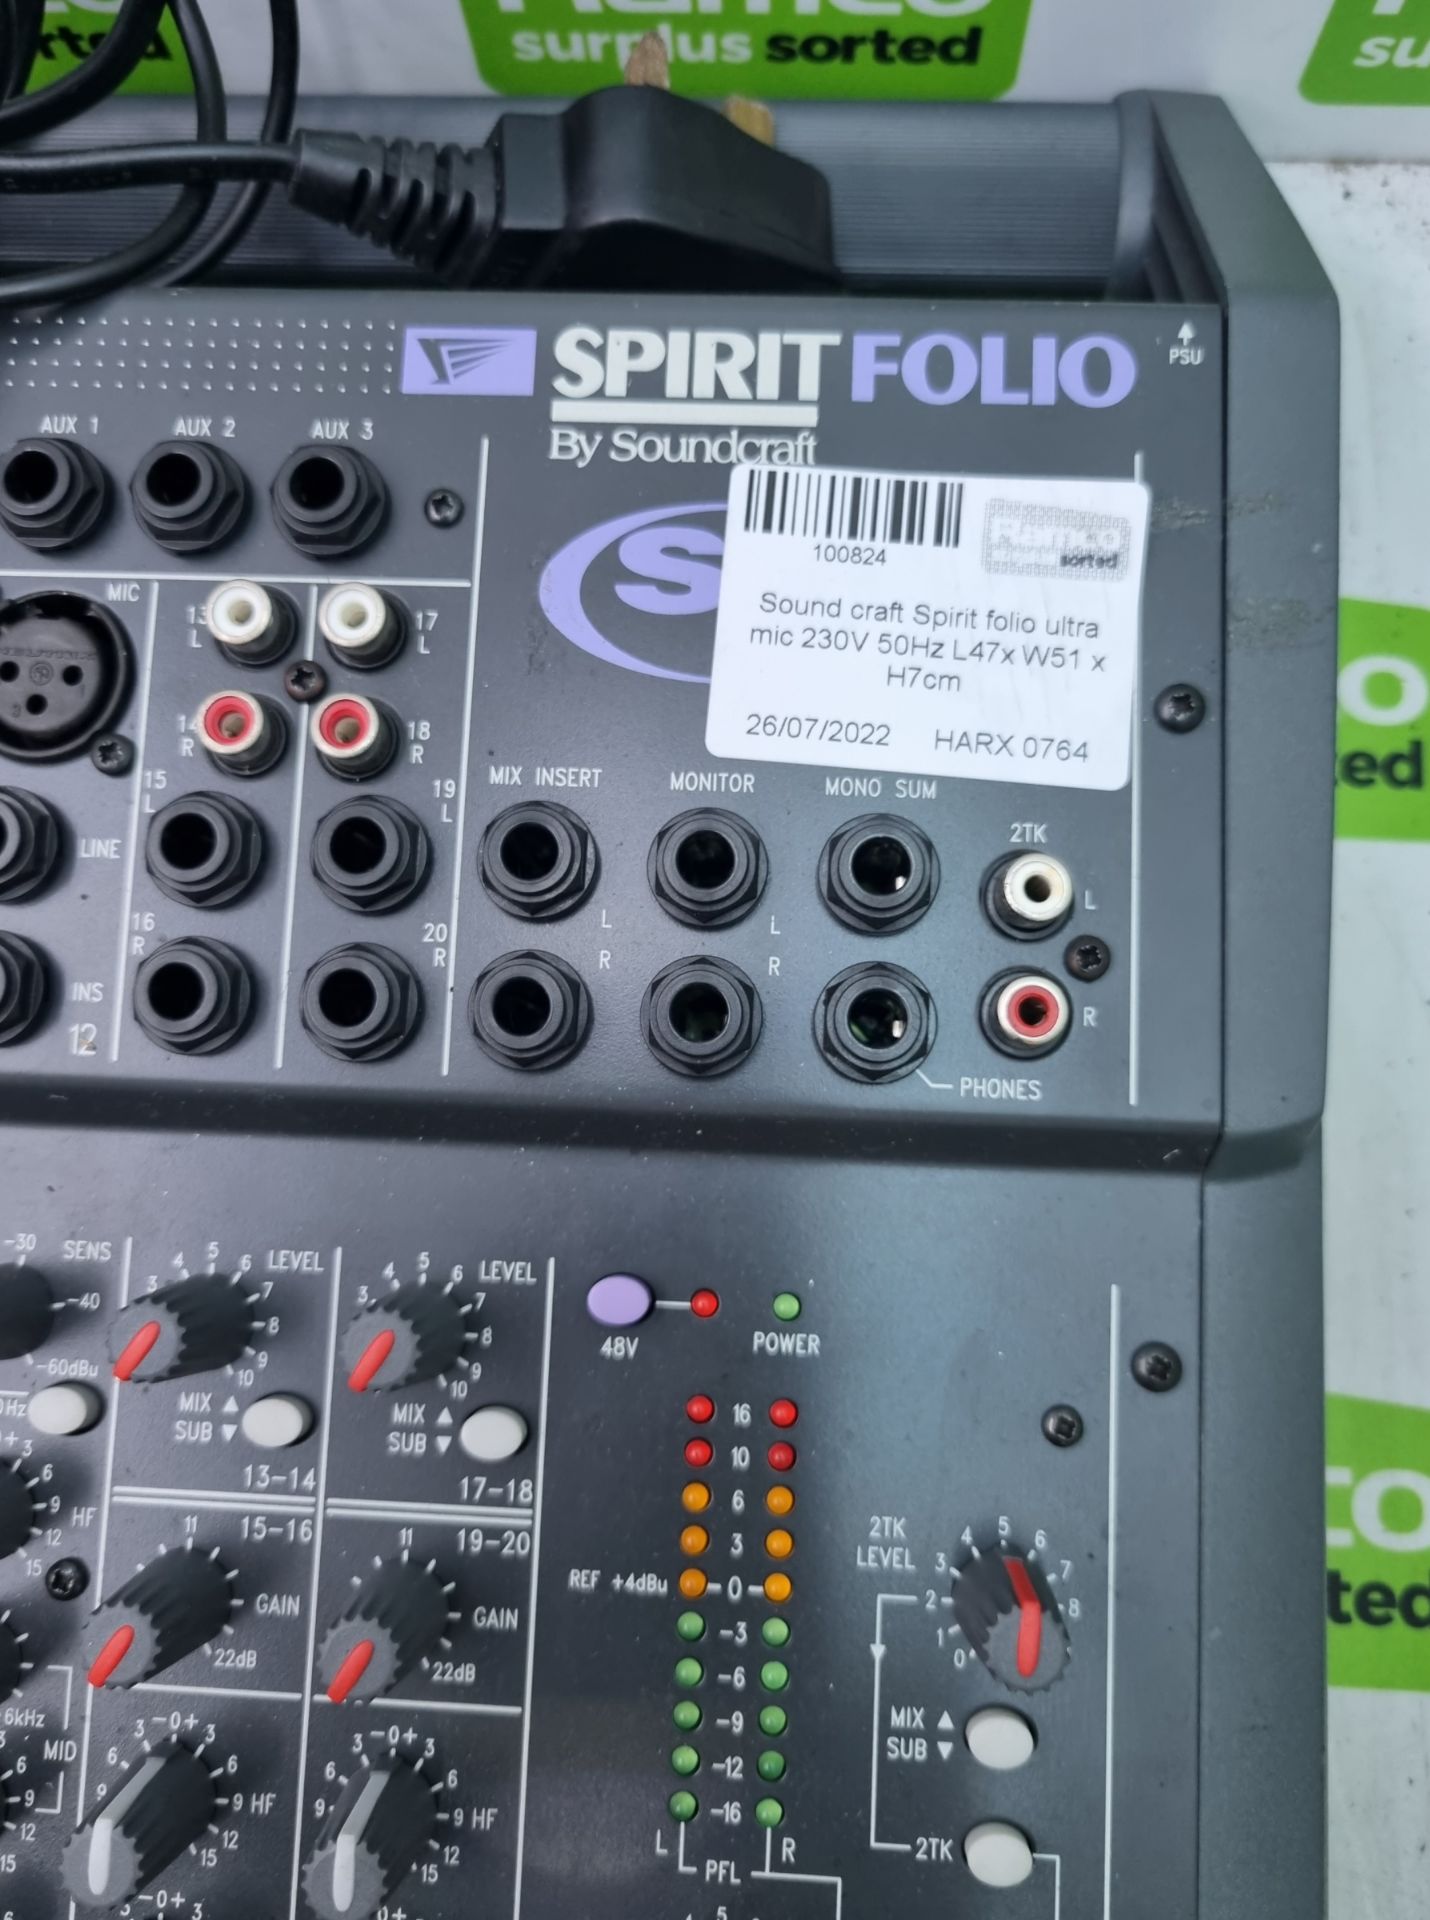 Soundcraft Spirit folio ultra mic 230V 50Hz L47x W51 x H7cm - Image 3 of 5